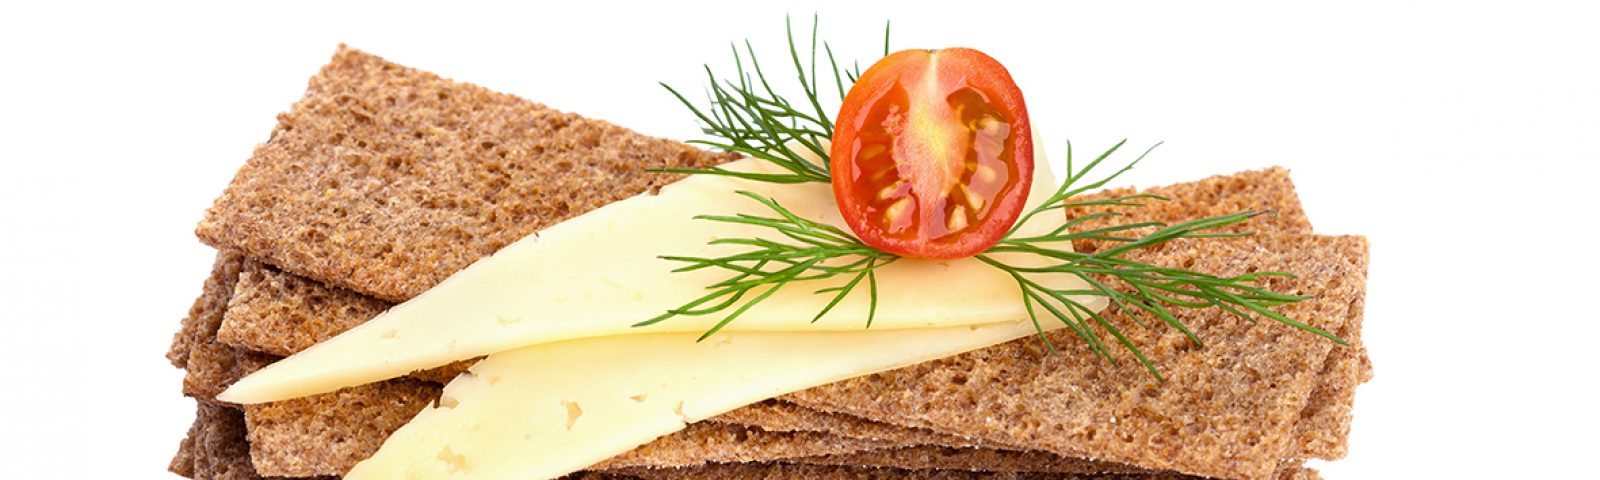 Butterkäse<br/> cheese slices